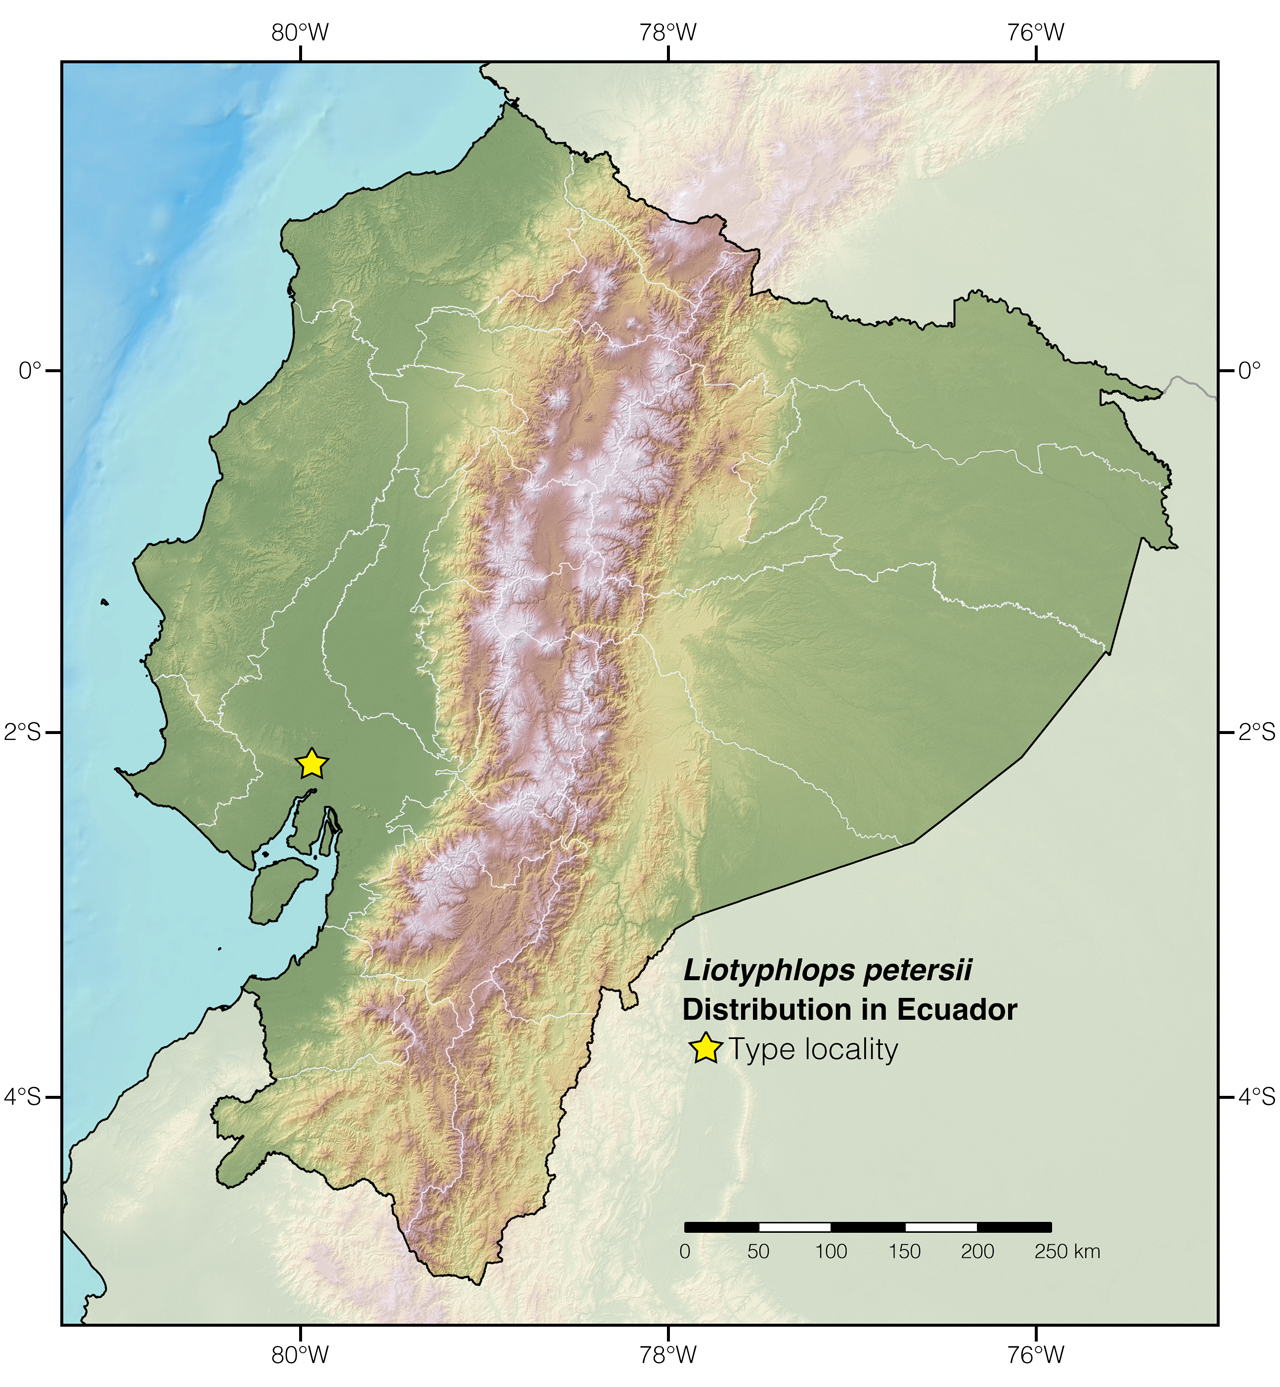 Distribution of Liotyphlops petersii in Ecuador